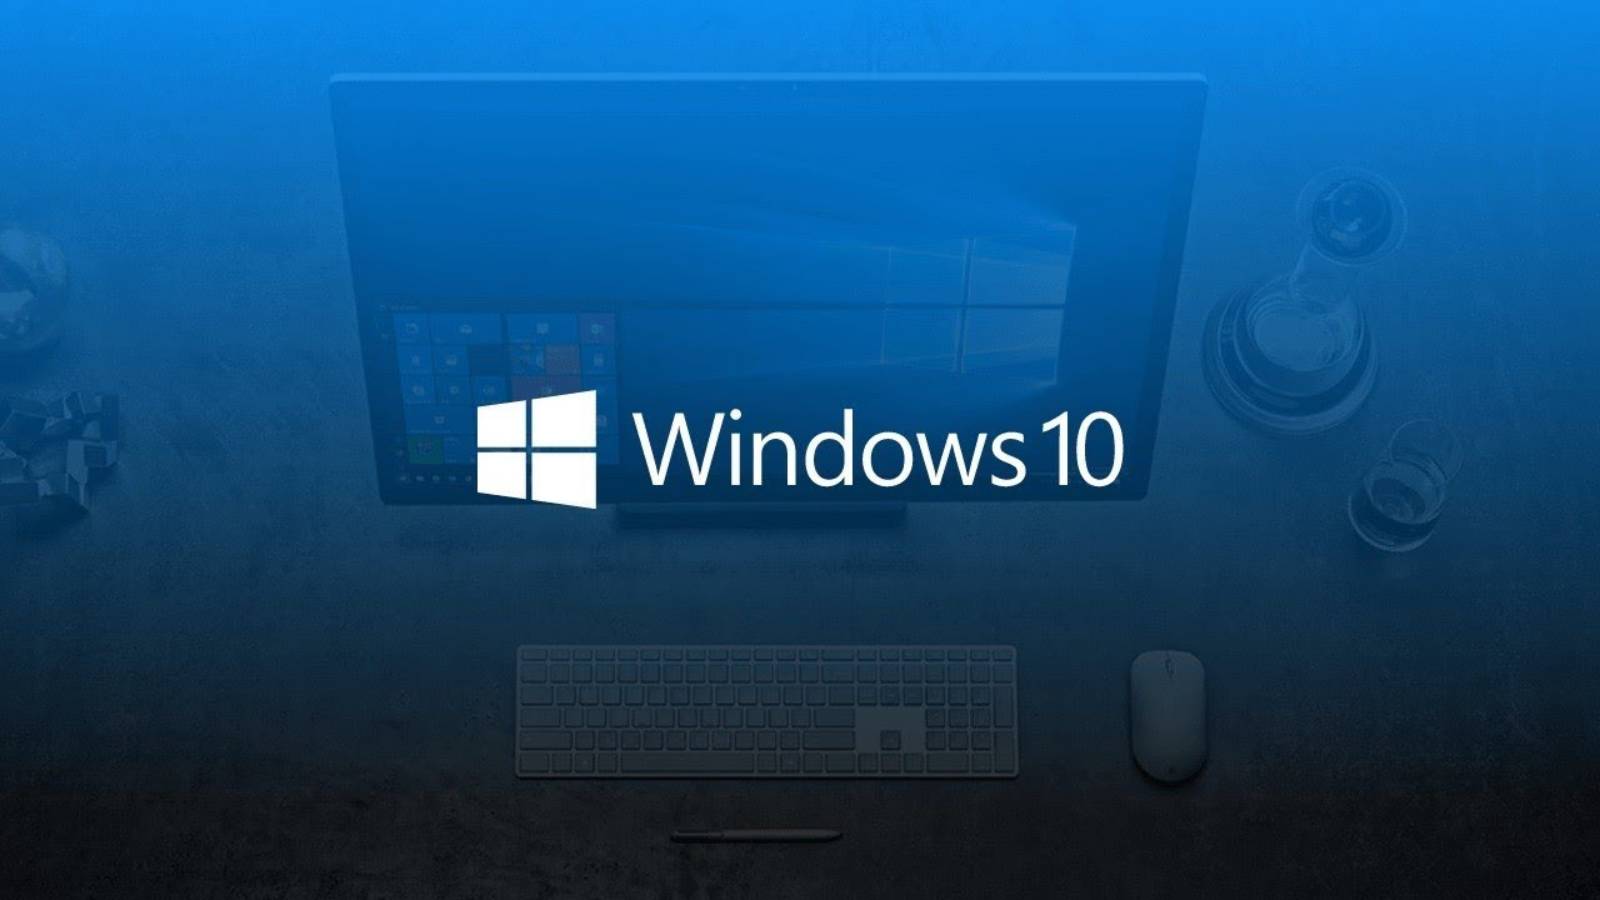 Windows 10 multifunctional